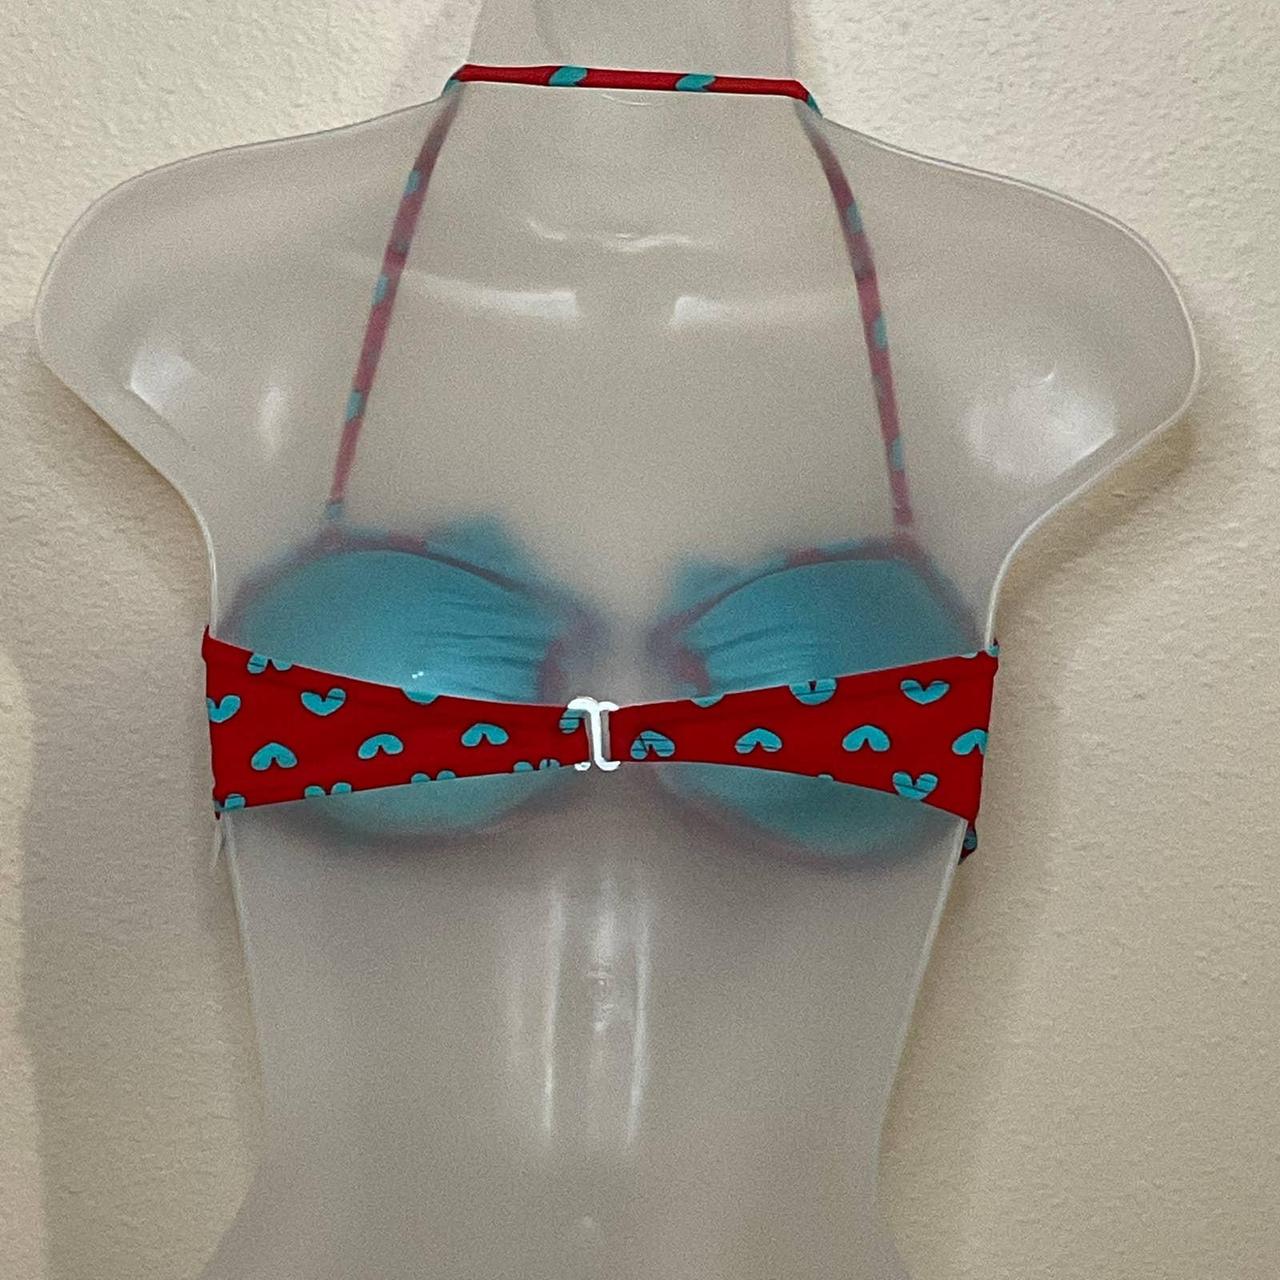 Product Image 2 - Women’s swimsuit bikini top from